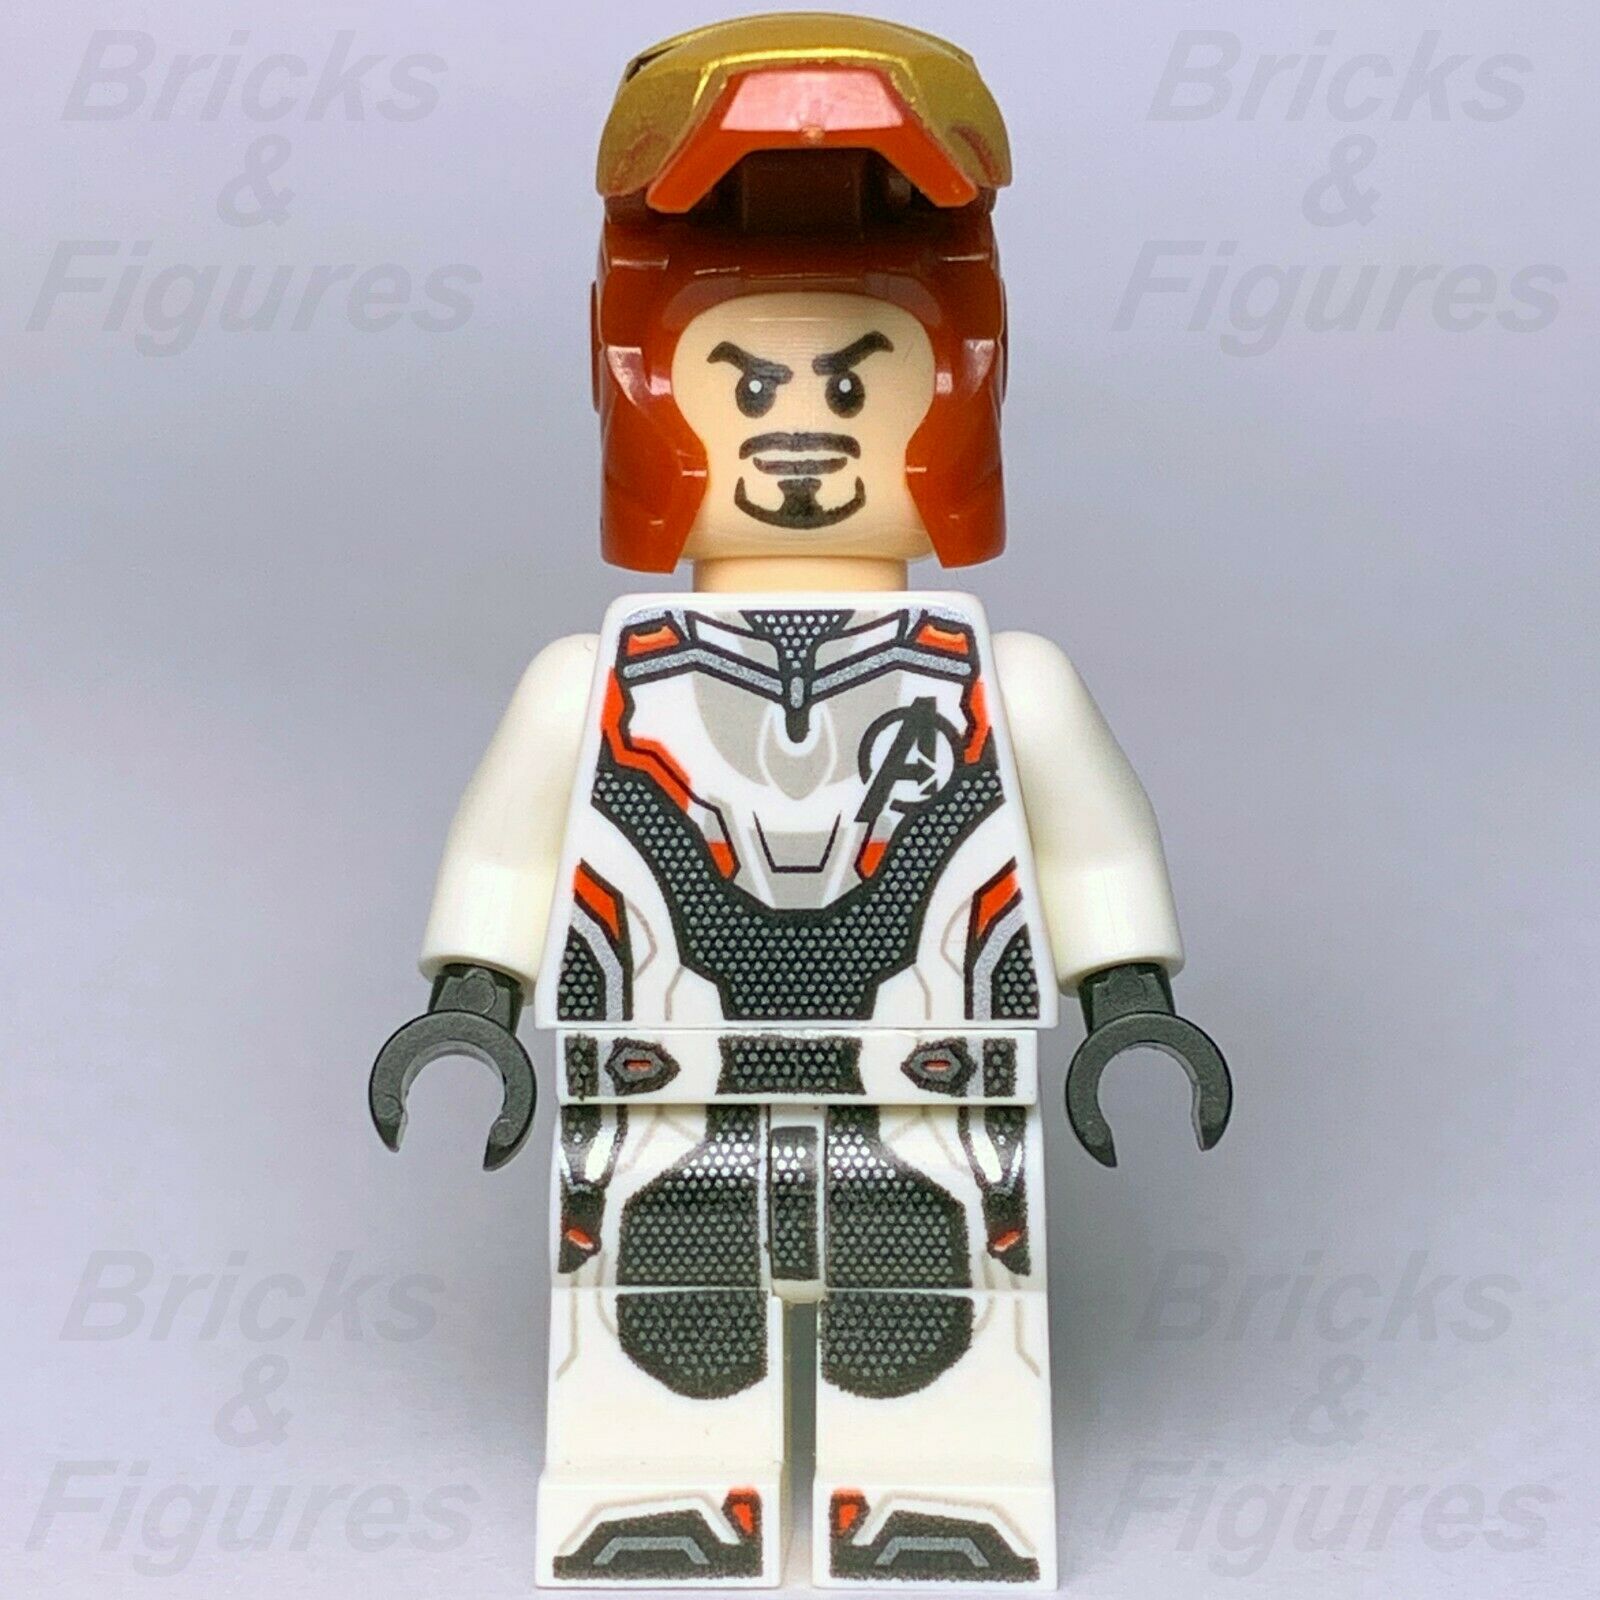 New Marvel Super Heroes LEGO Iron Man Avengers Suit Minifigure 30452 Endgame - Bricks & Figures